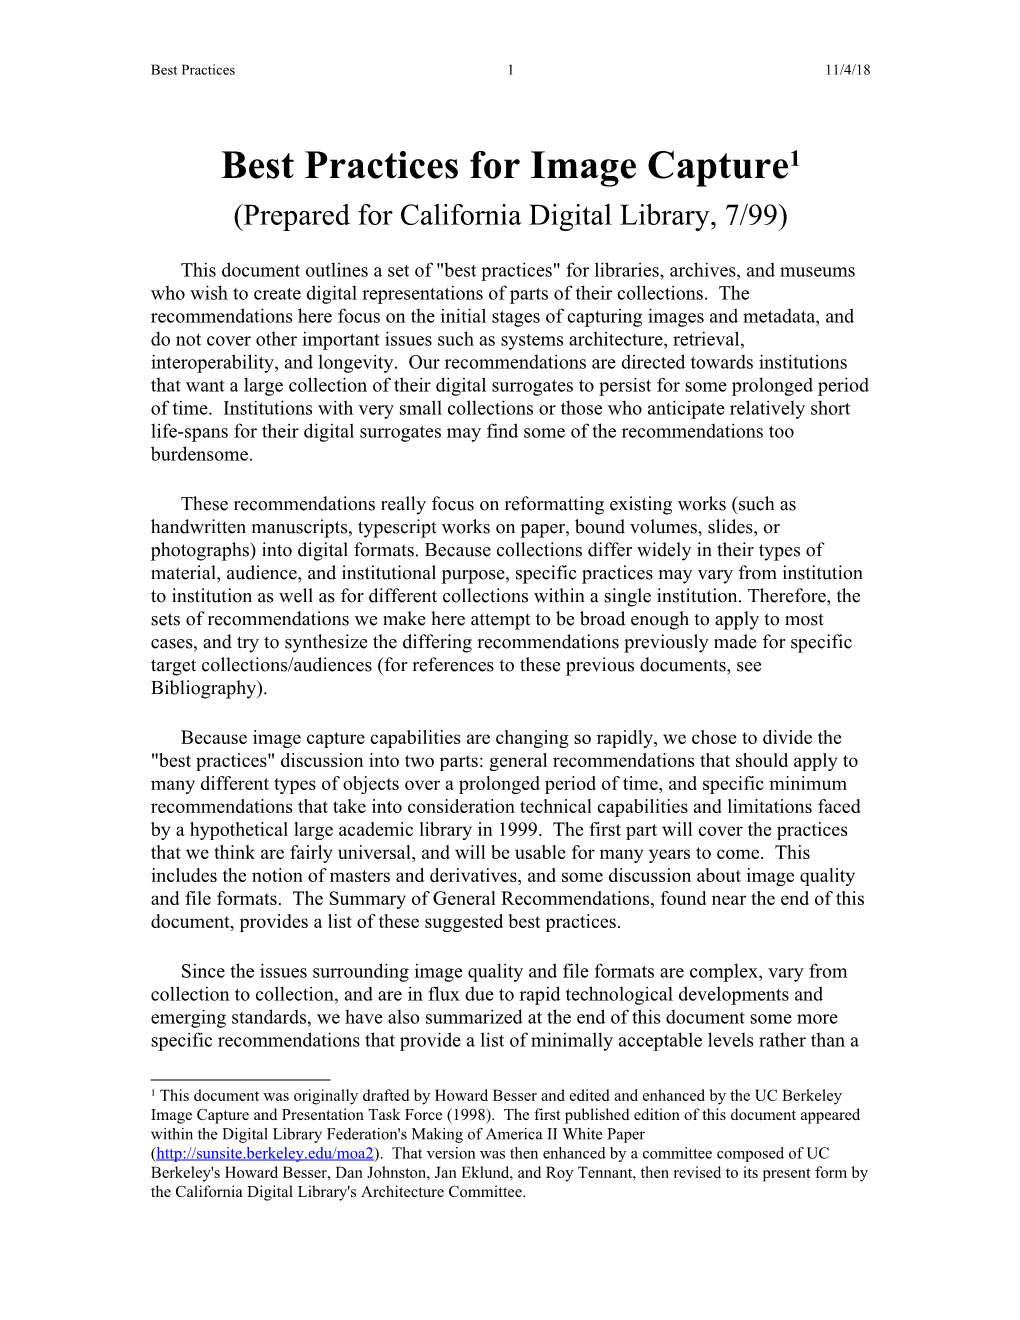 Part IV: Best Practices for Image Capture